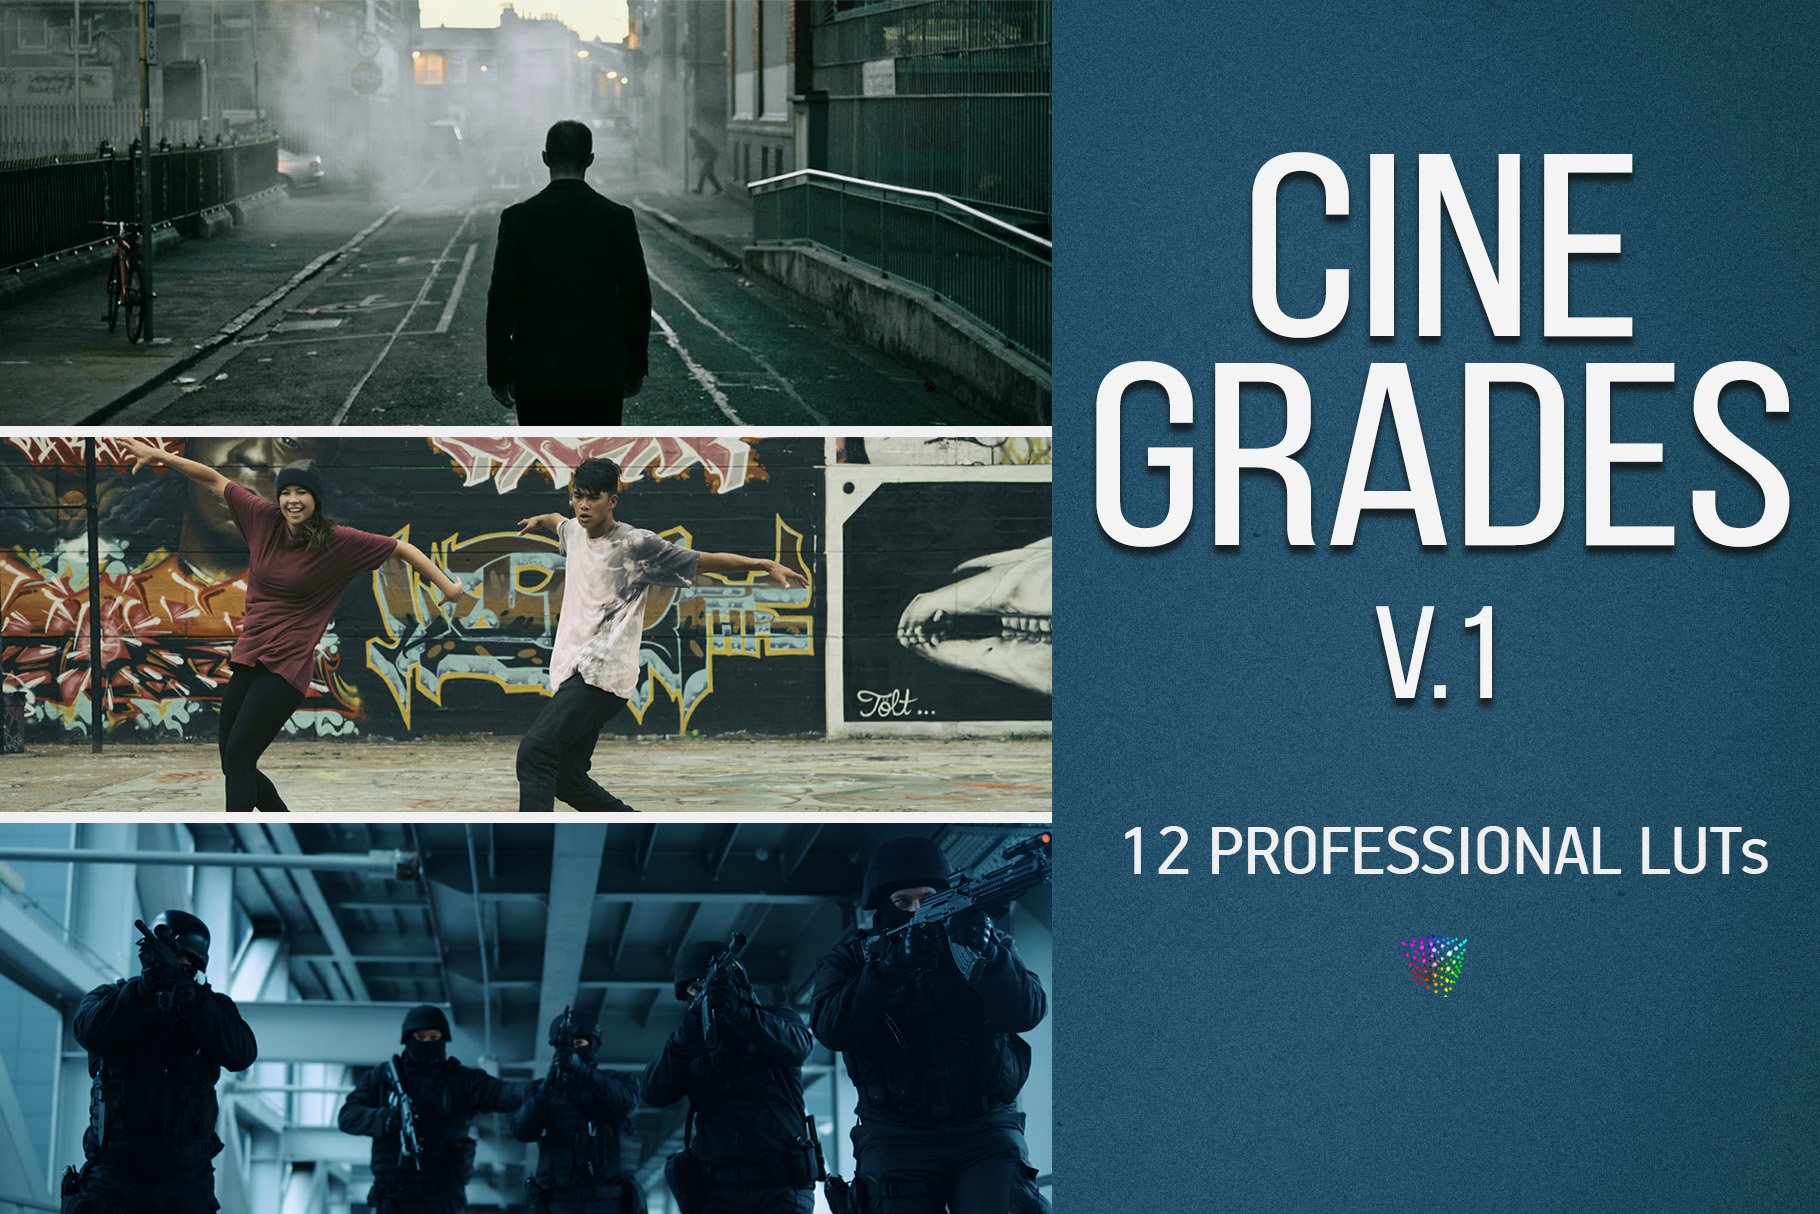 CineGrades LUTs v.1 Cinematic LUTscover image.